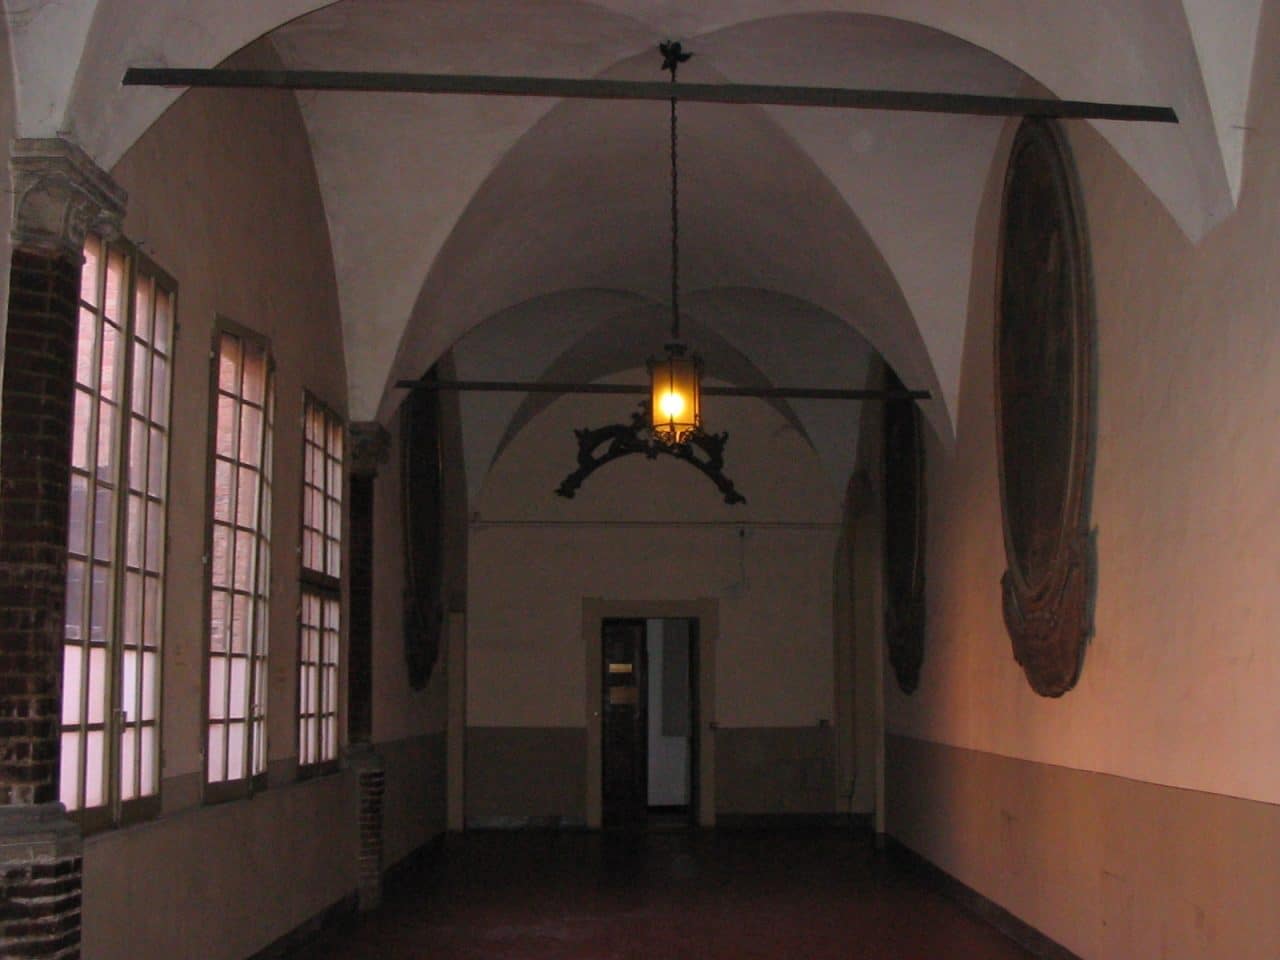 Cultura Italiana болонский вестибюль с фонарем на потолке